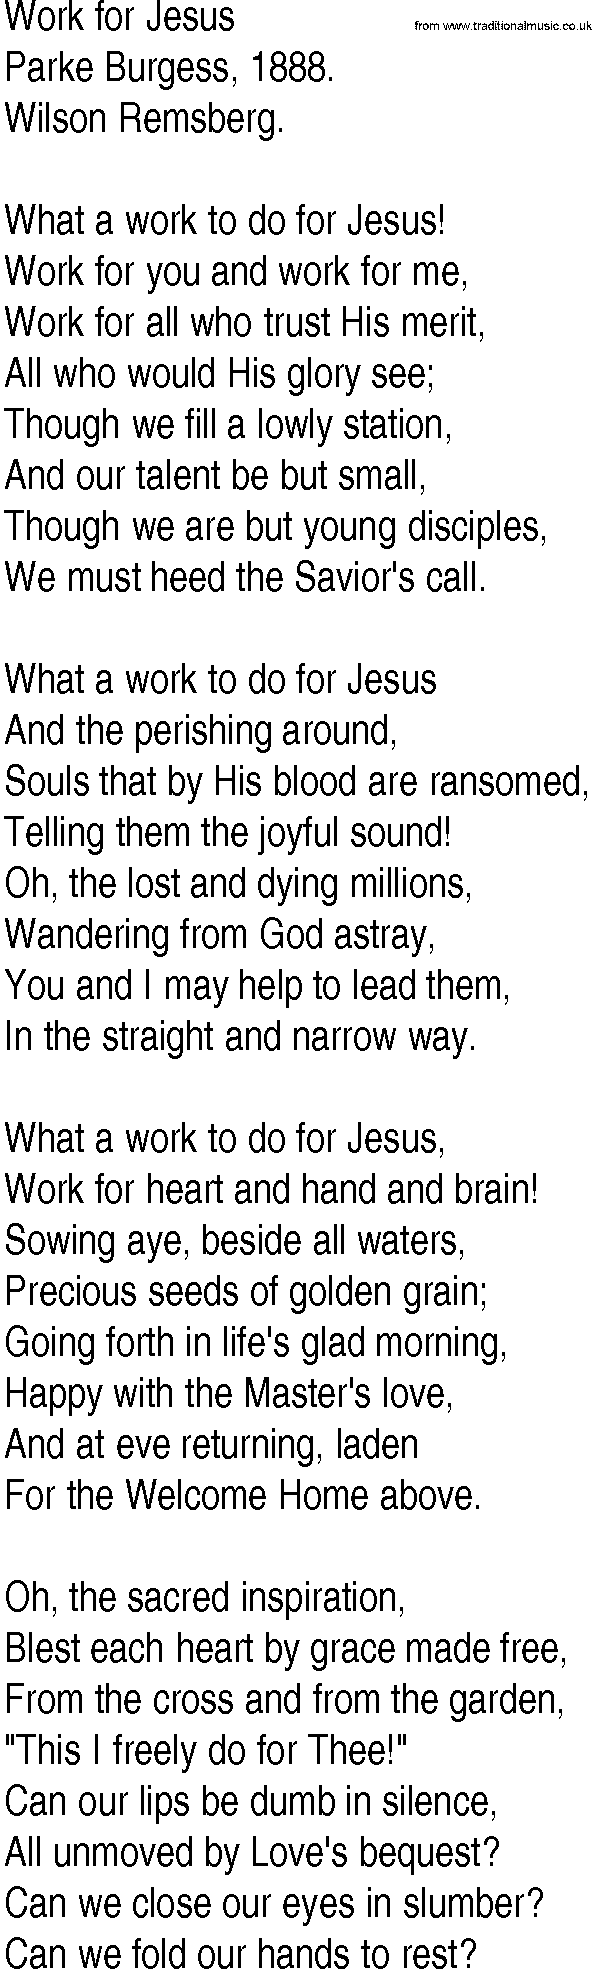 Hymn and Gospel Song: Work for Jesus by Parke Burgess lyrics